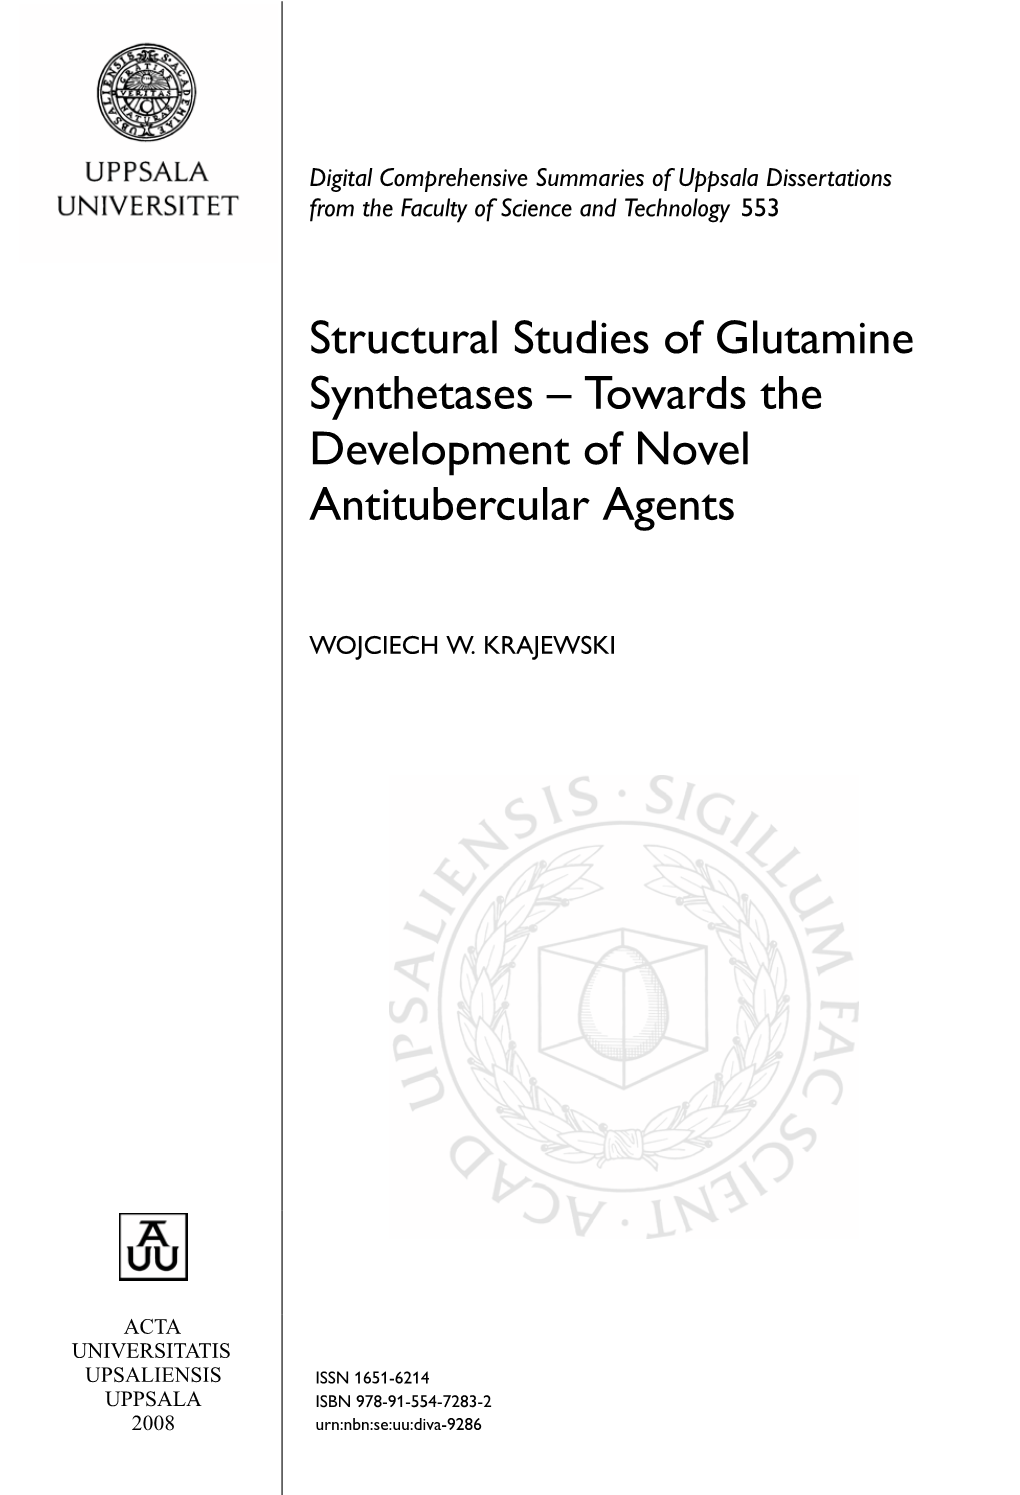 Structural Studies of Glutamine Synthetases – Towards the Development of Novel Antitubercular Agents